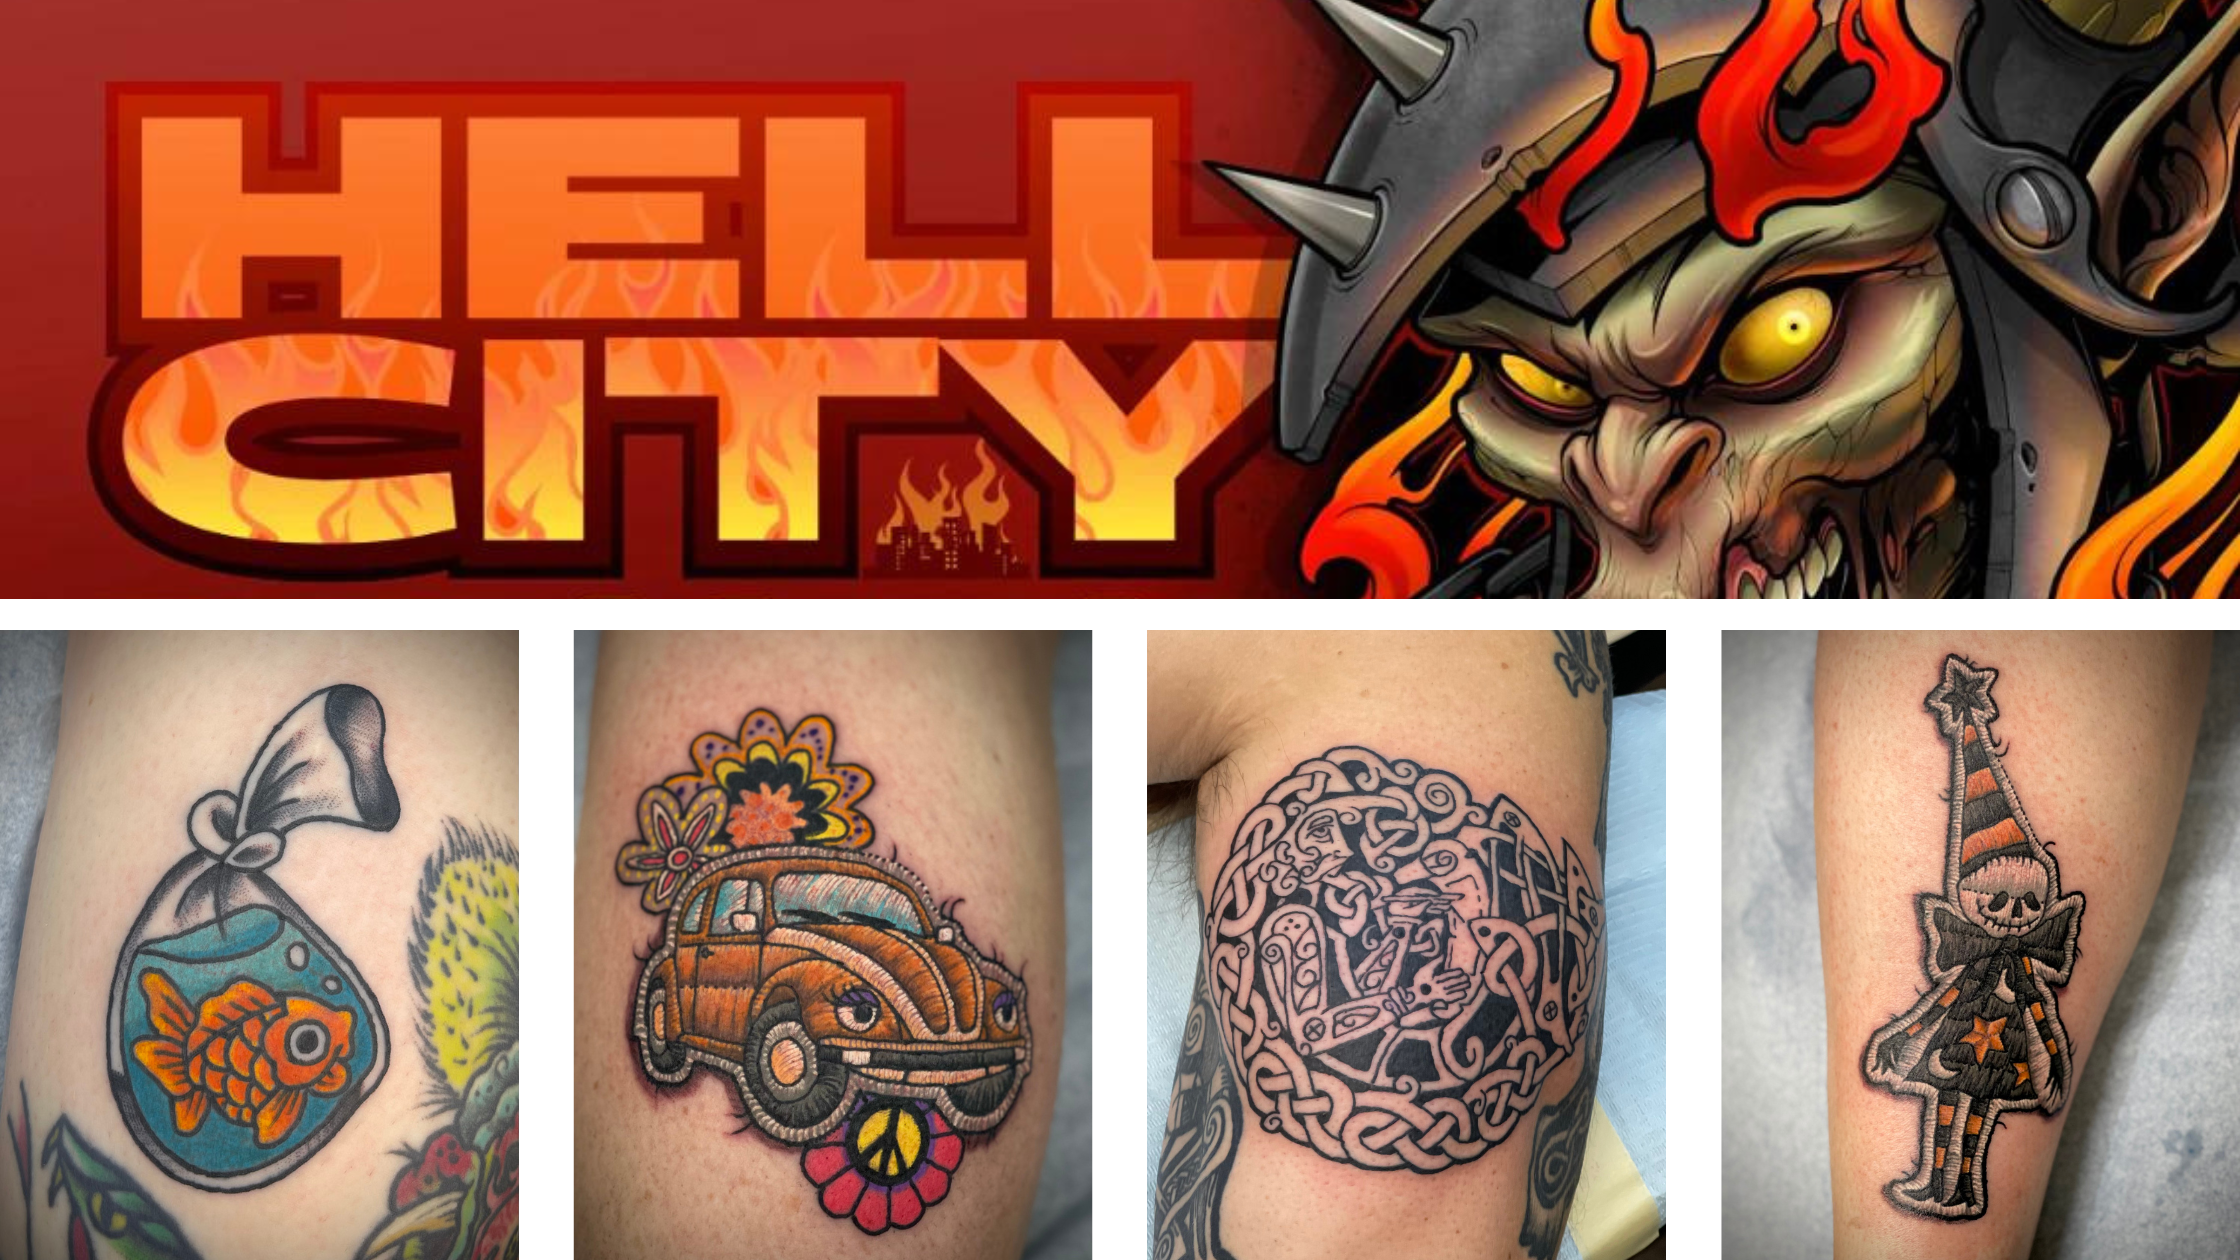 blog-hell-city-tattoo